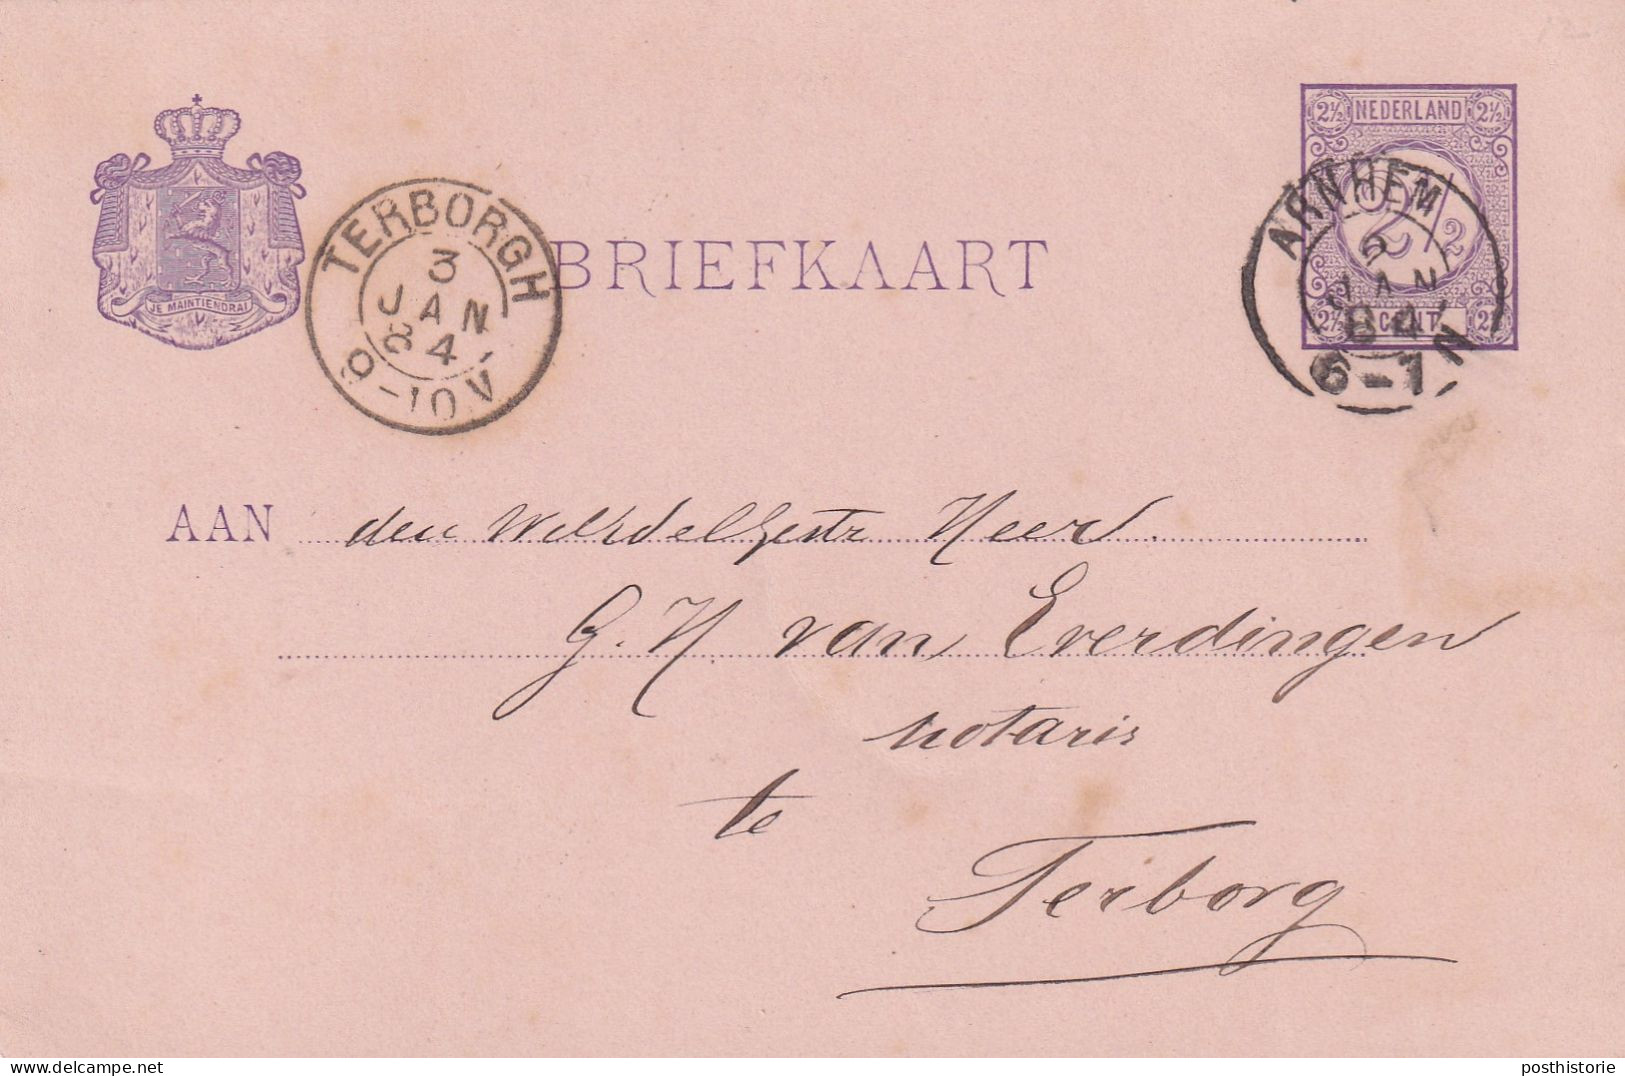 Briefkaart 2 Jan 1884 Arnhem (postkantoor Kleinrond) Naar Terborgh (kleinrond) - Postal History